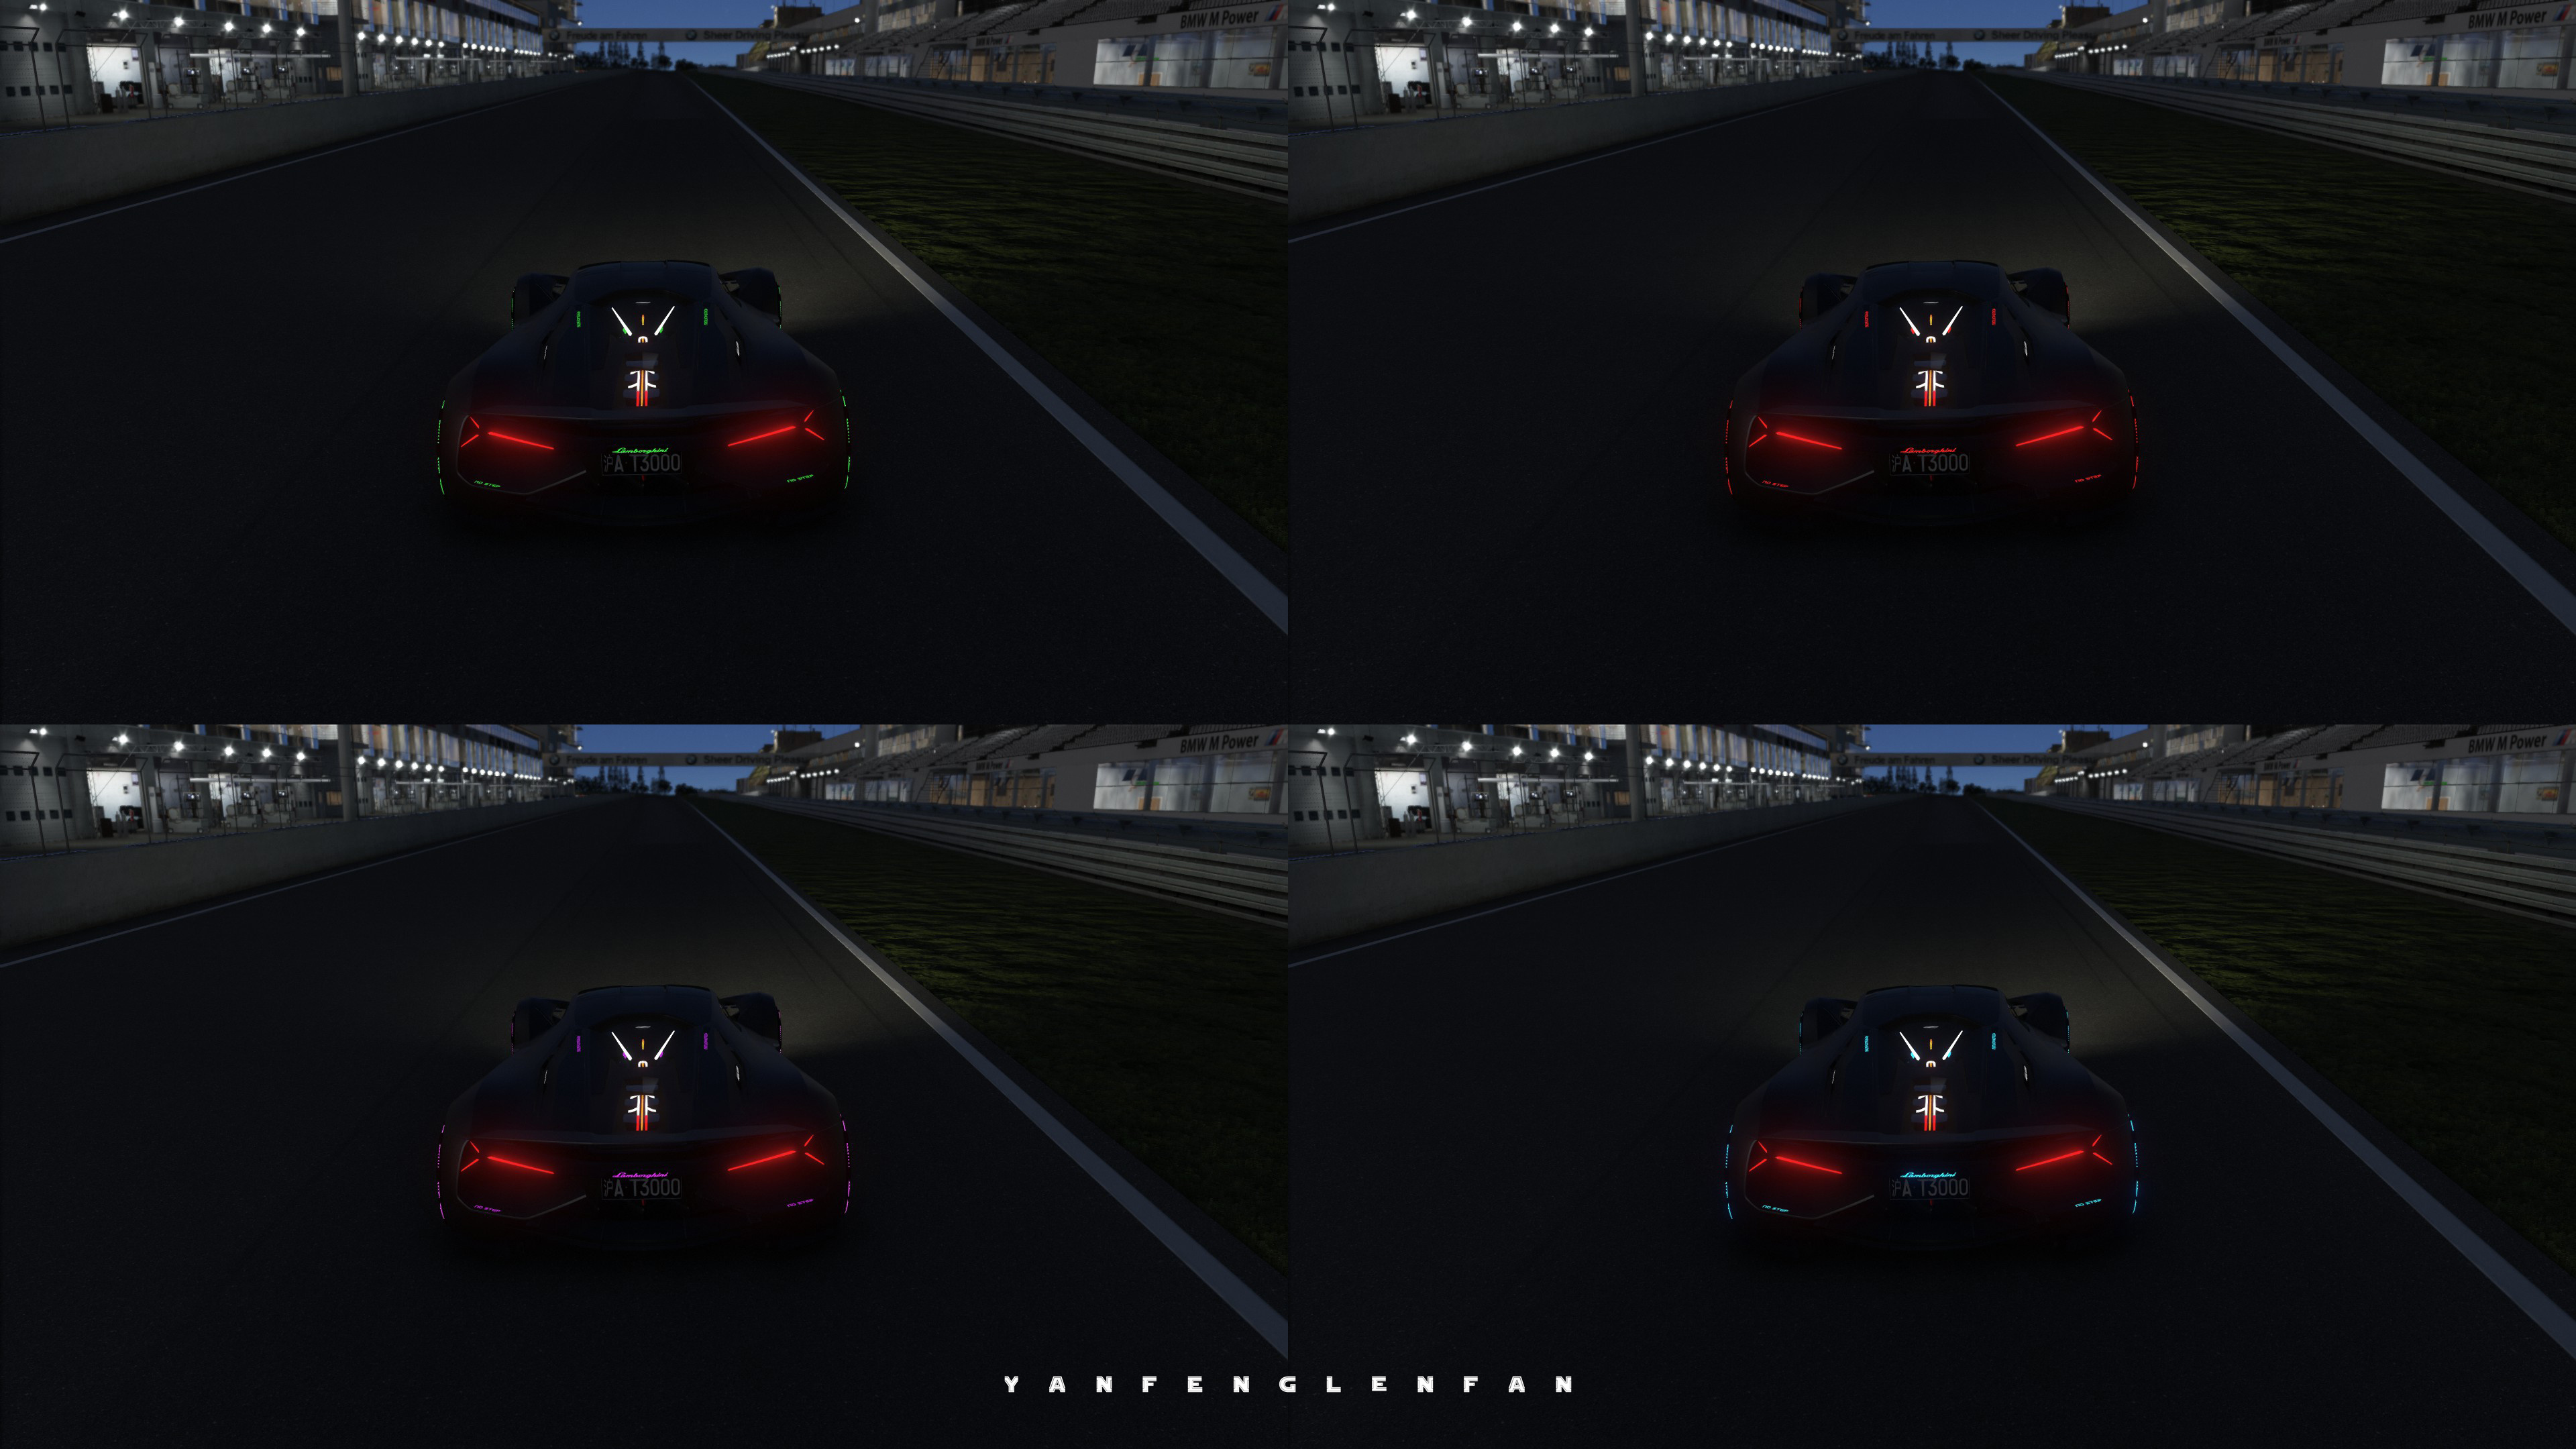 GTA 5 REAL LIFE MOD #589 - Lamborghini Terzo Millennio!!! (GTA 5 REAL LIFE  MODS) 